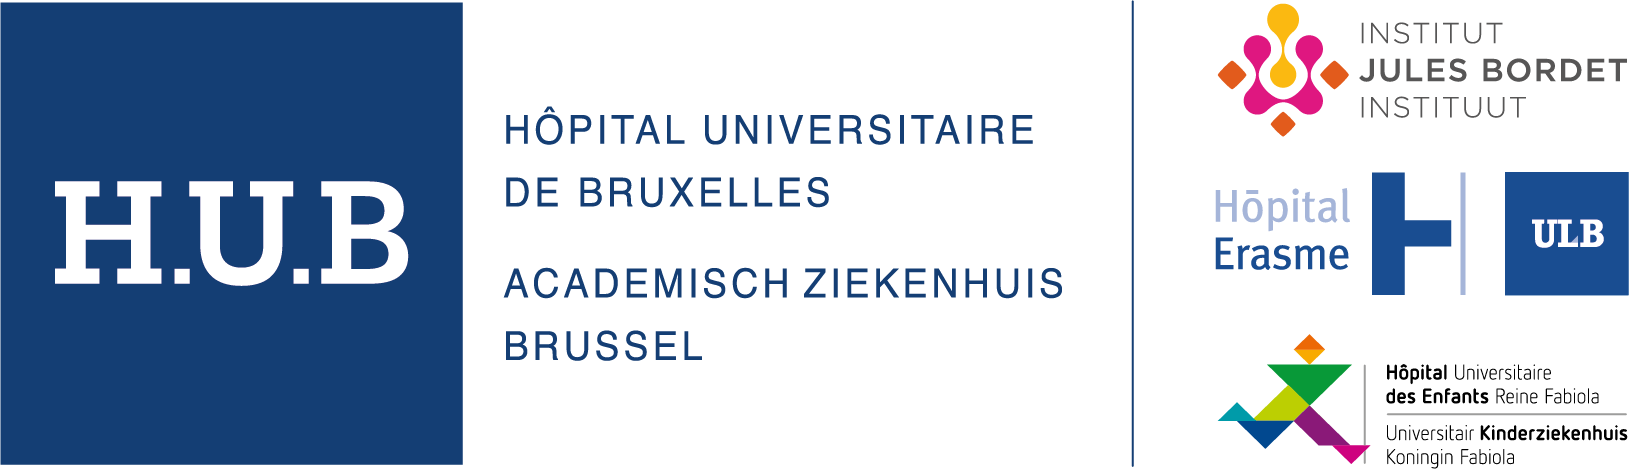 Hôpital Universitaire de Bruxelles - Institut Jules Bordet logo